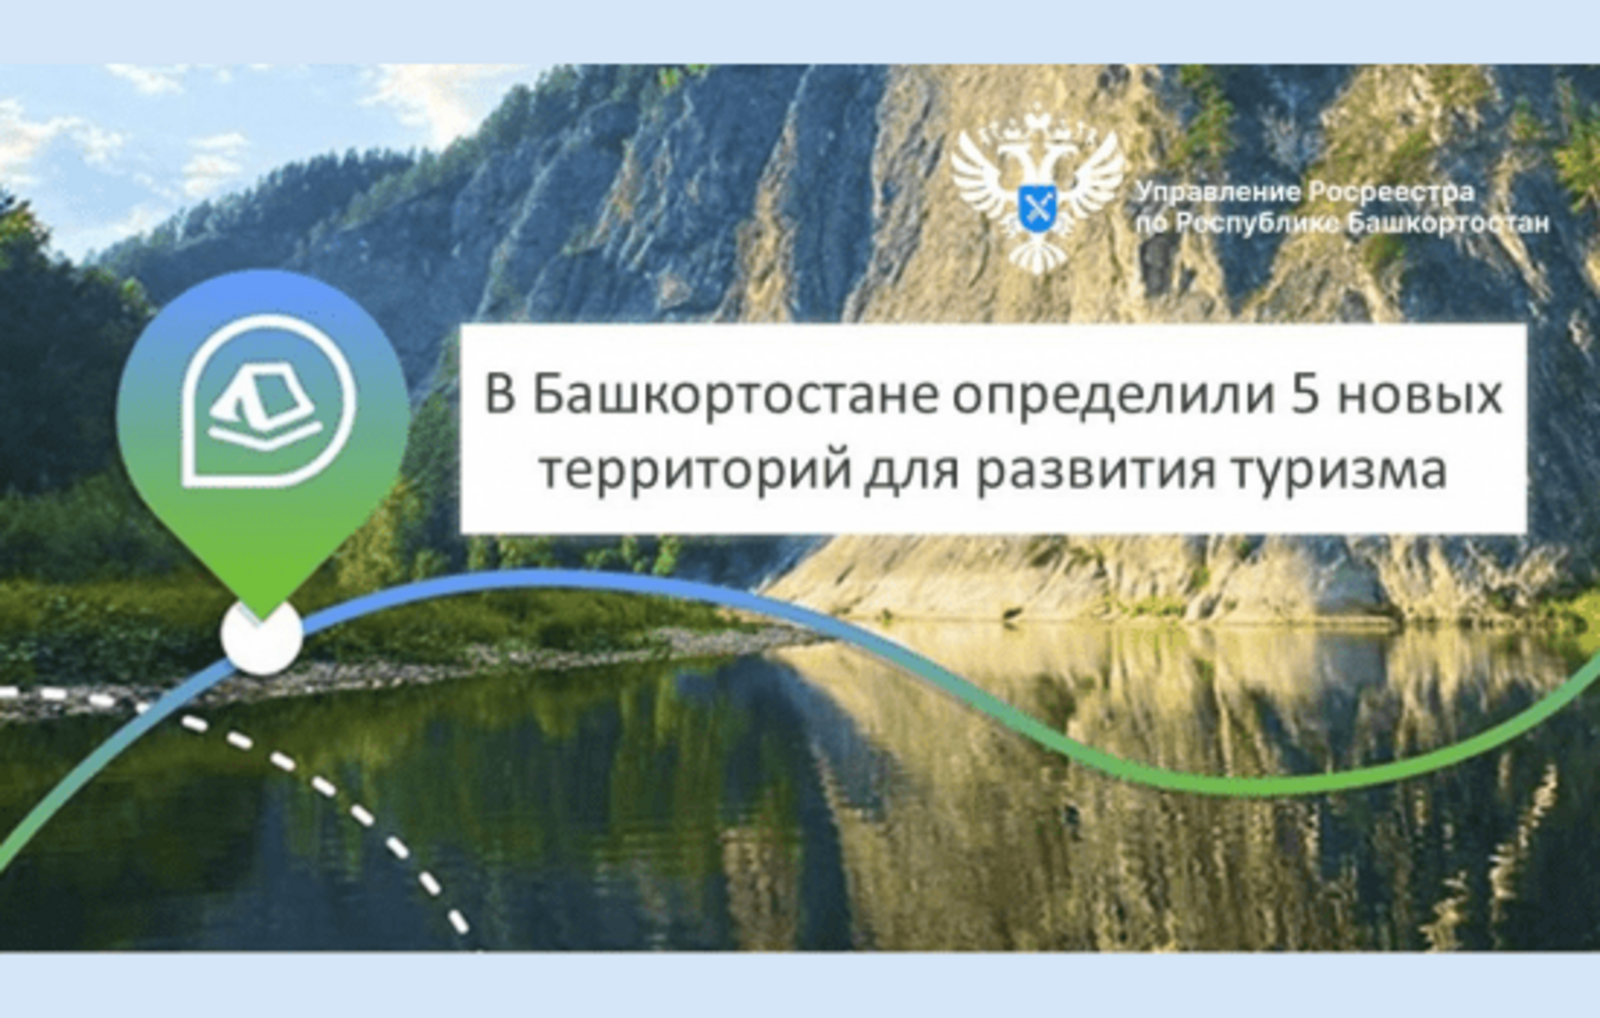 В Башкортостане определили 5 территорий для развития туризма